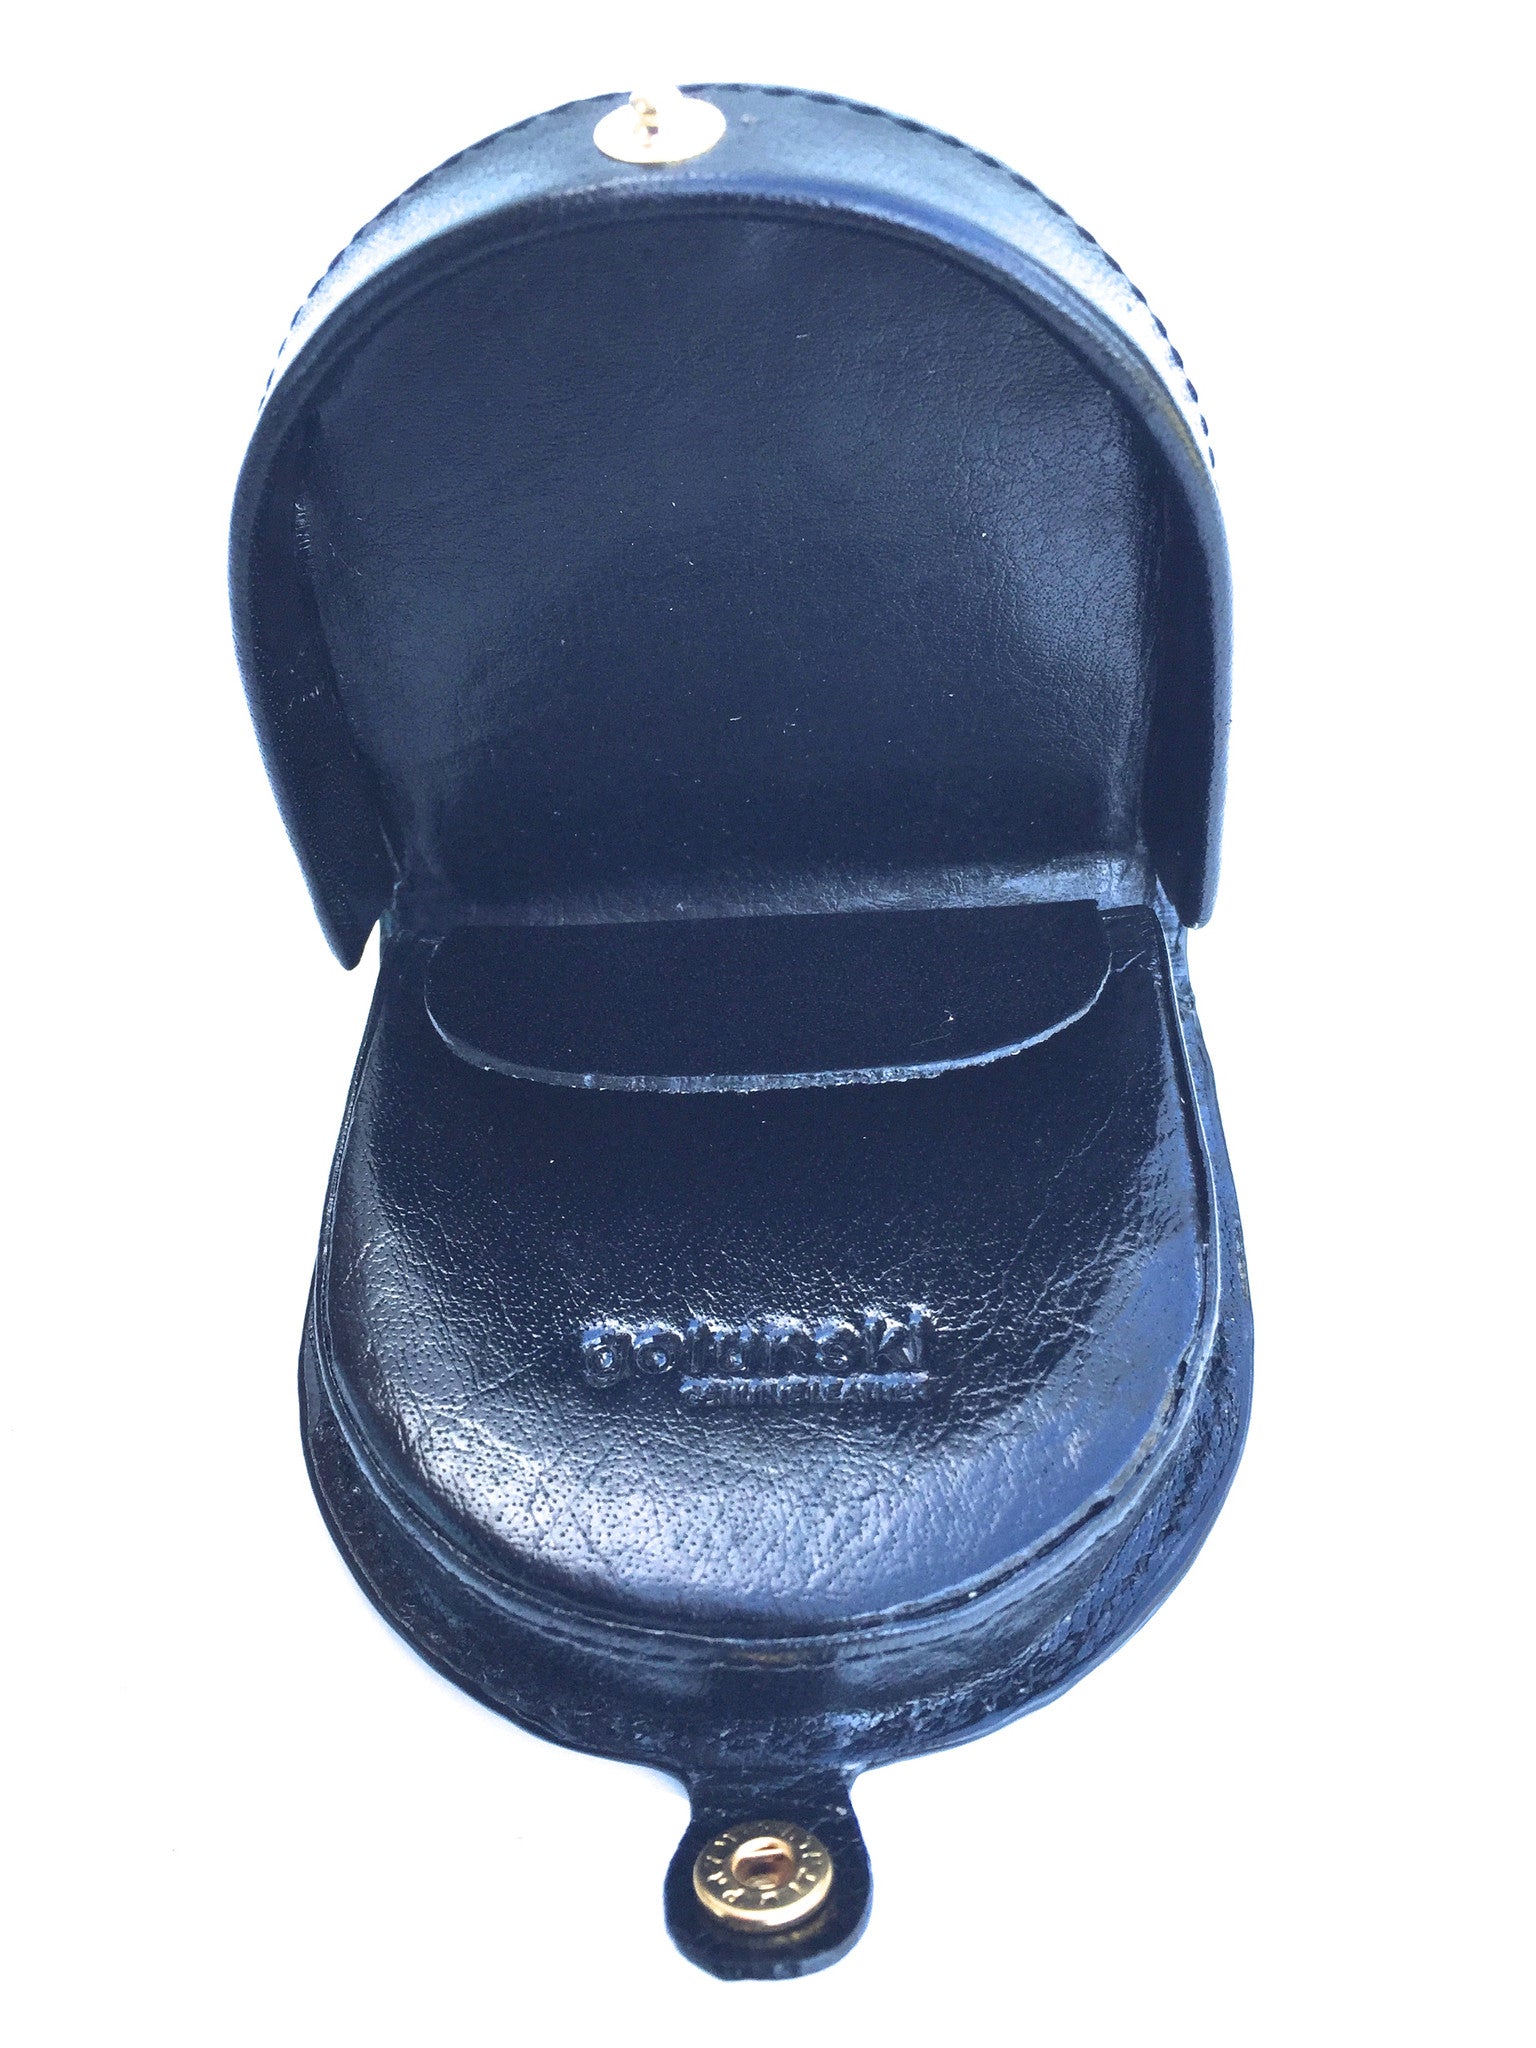 Style 143: Mens Leather Horseshoe Coin Tray Purse In Black By Golunski - Baked Apple WM Ltd